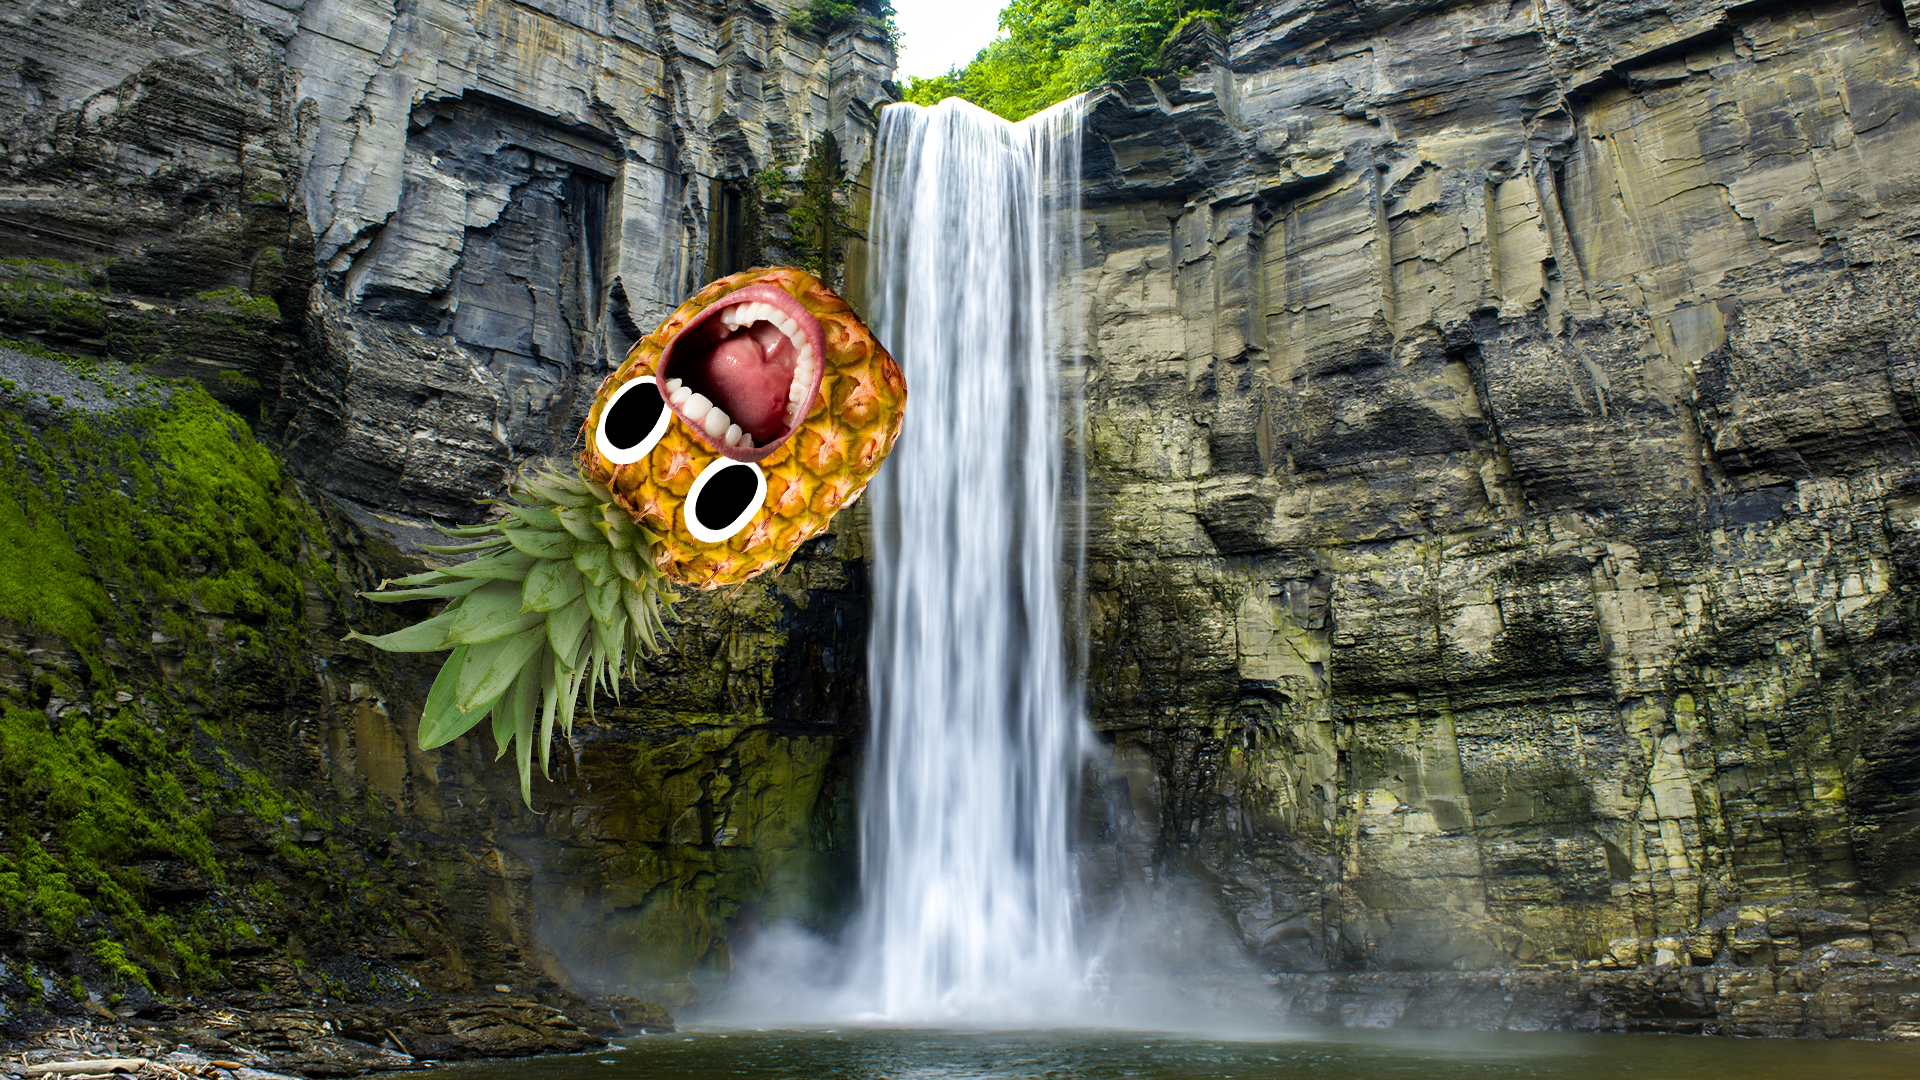 Pineapple falling down a waterfall